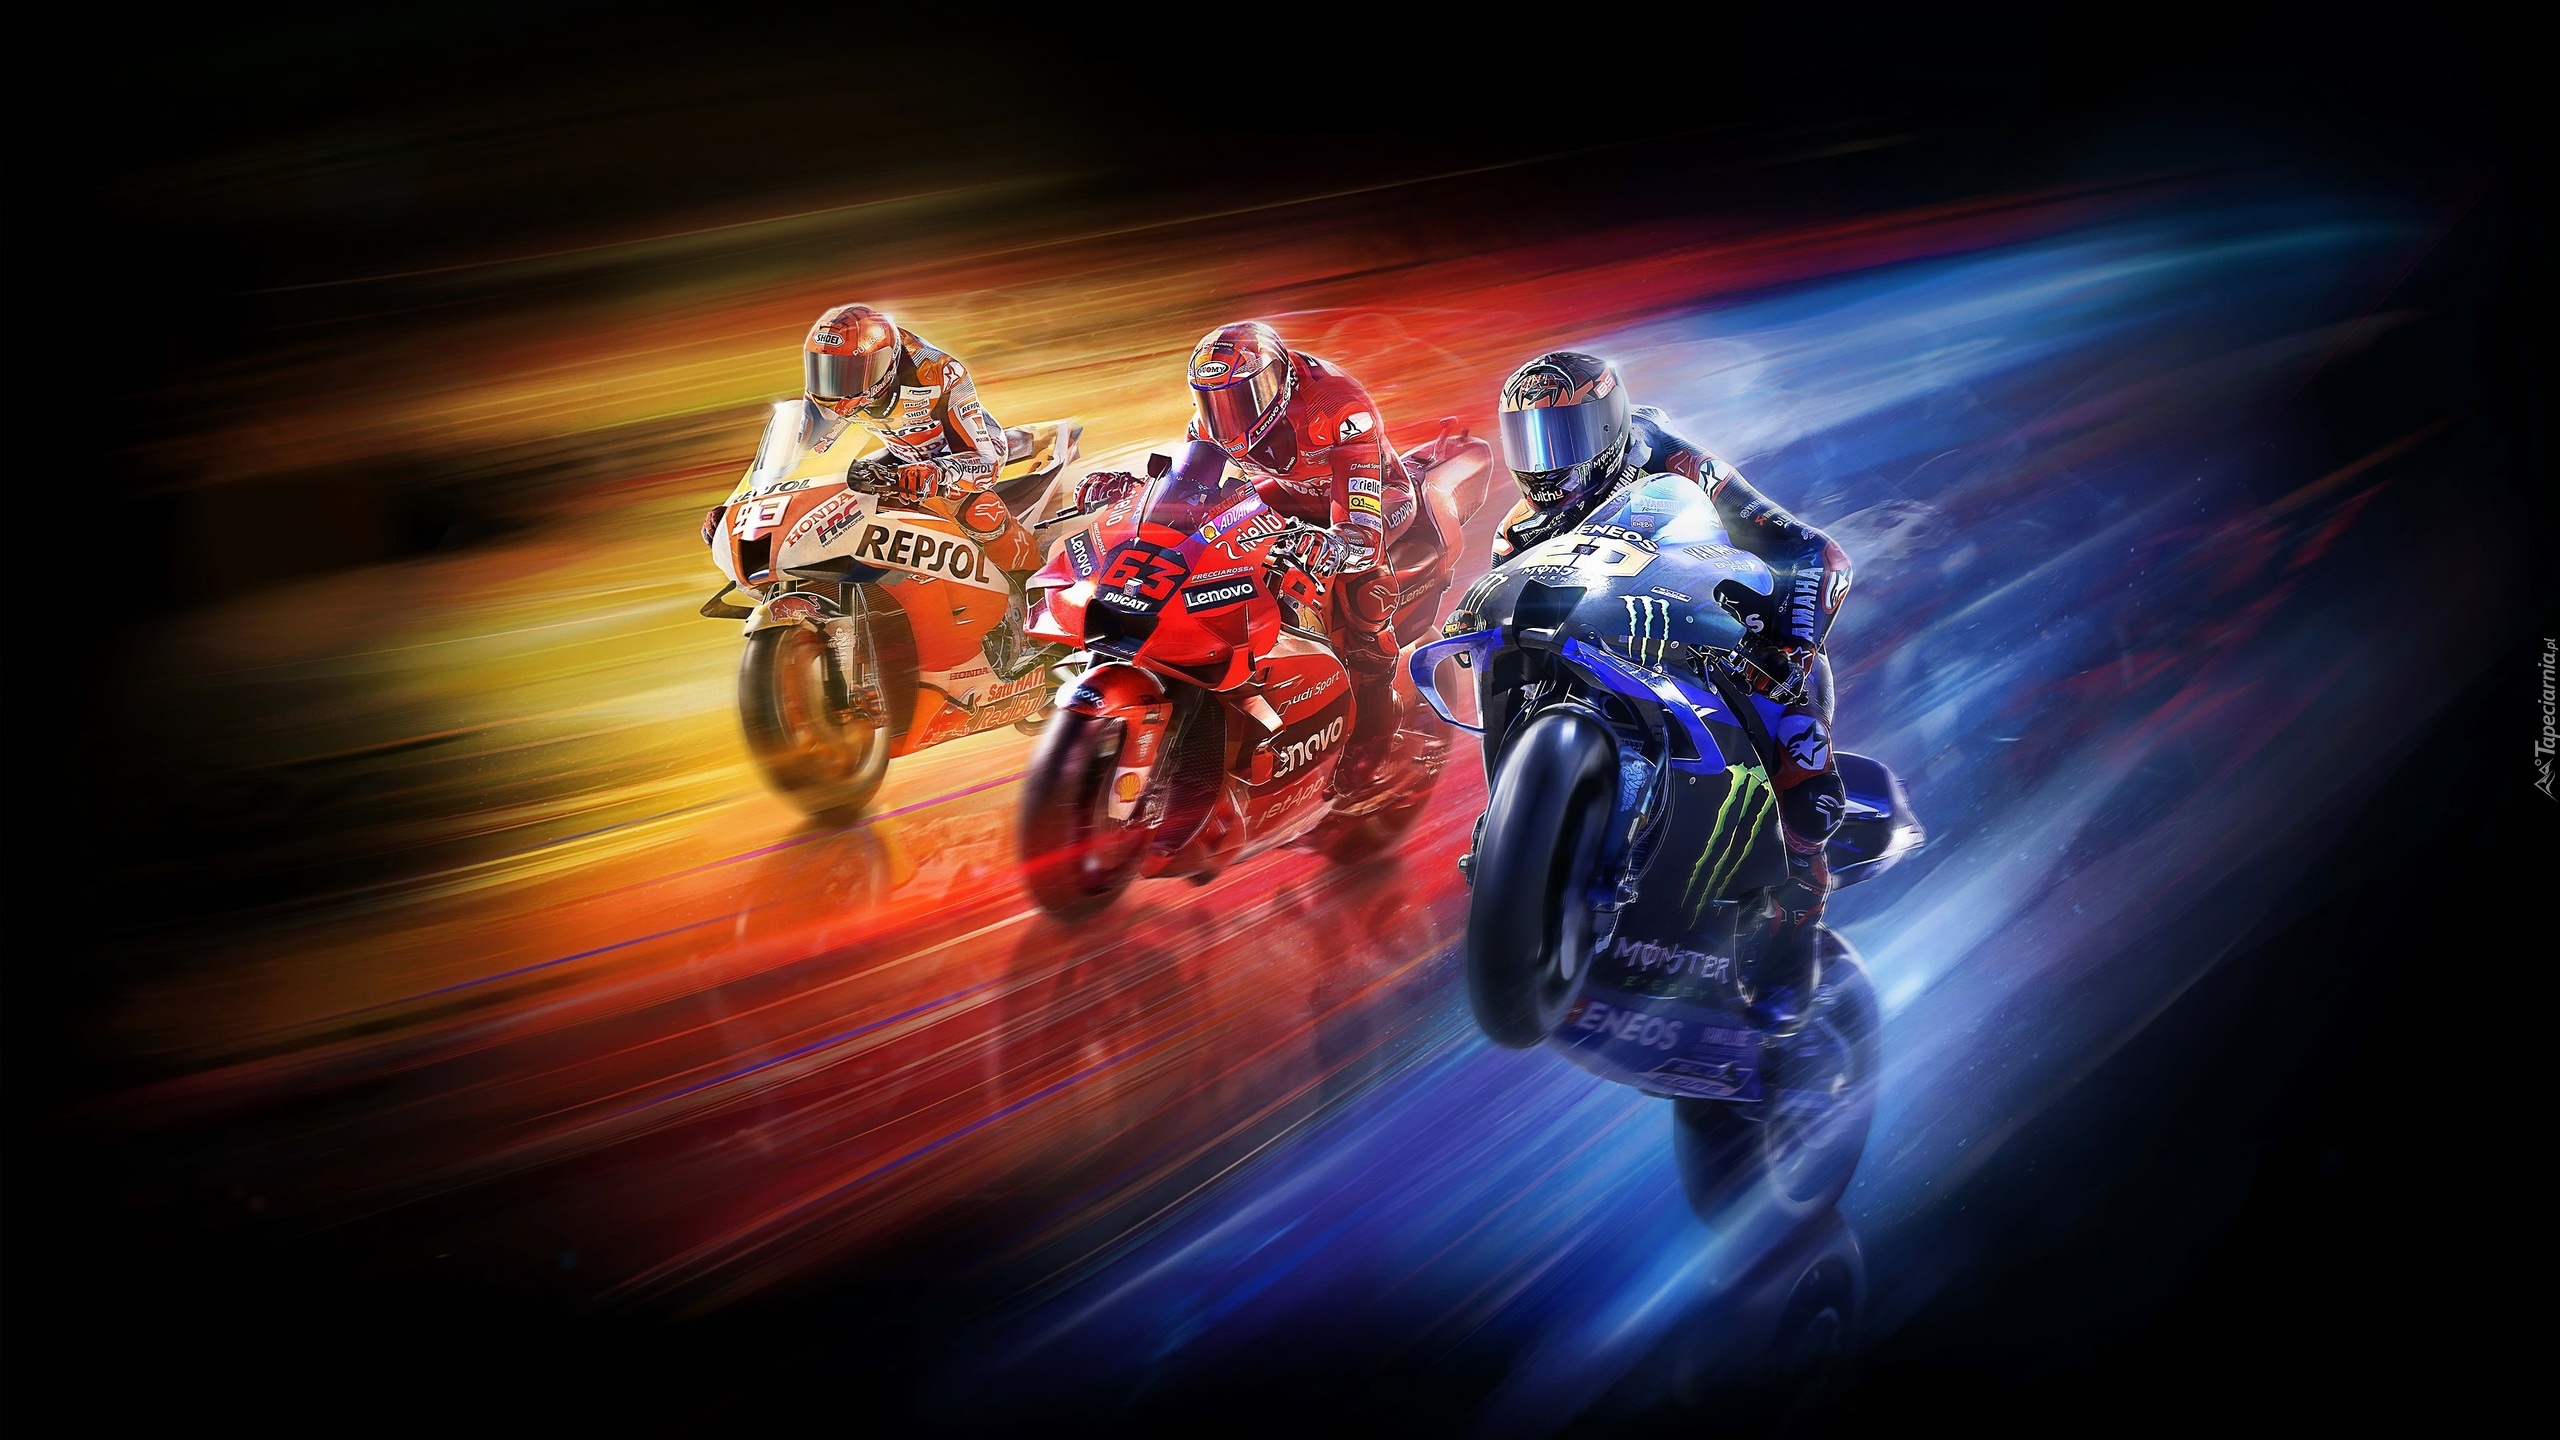 Gra, MotoGP, Motocykle, Honda, Ducati, Yamaha, Motocykliści, Ruch, Szybkość